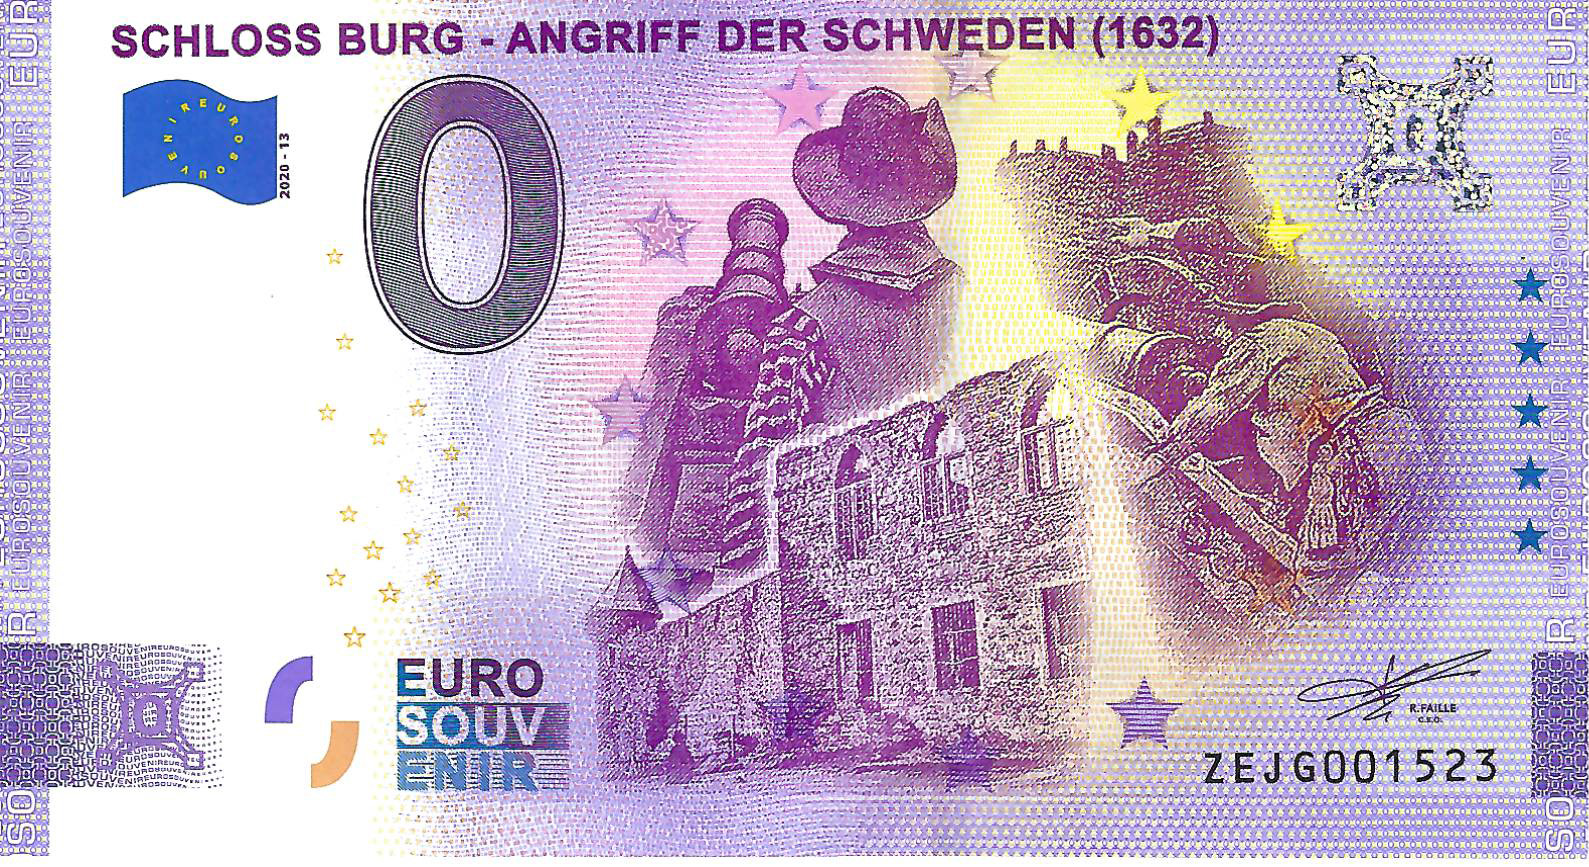 0 Euro biljet Duitsland 2020 - Schloss Burg XIII Angriff der Schweden MISPRINT